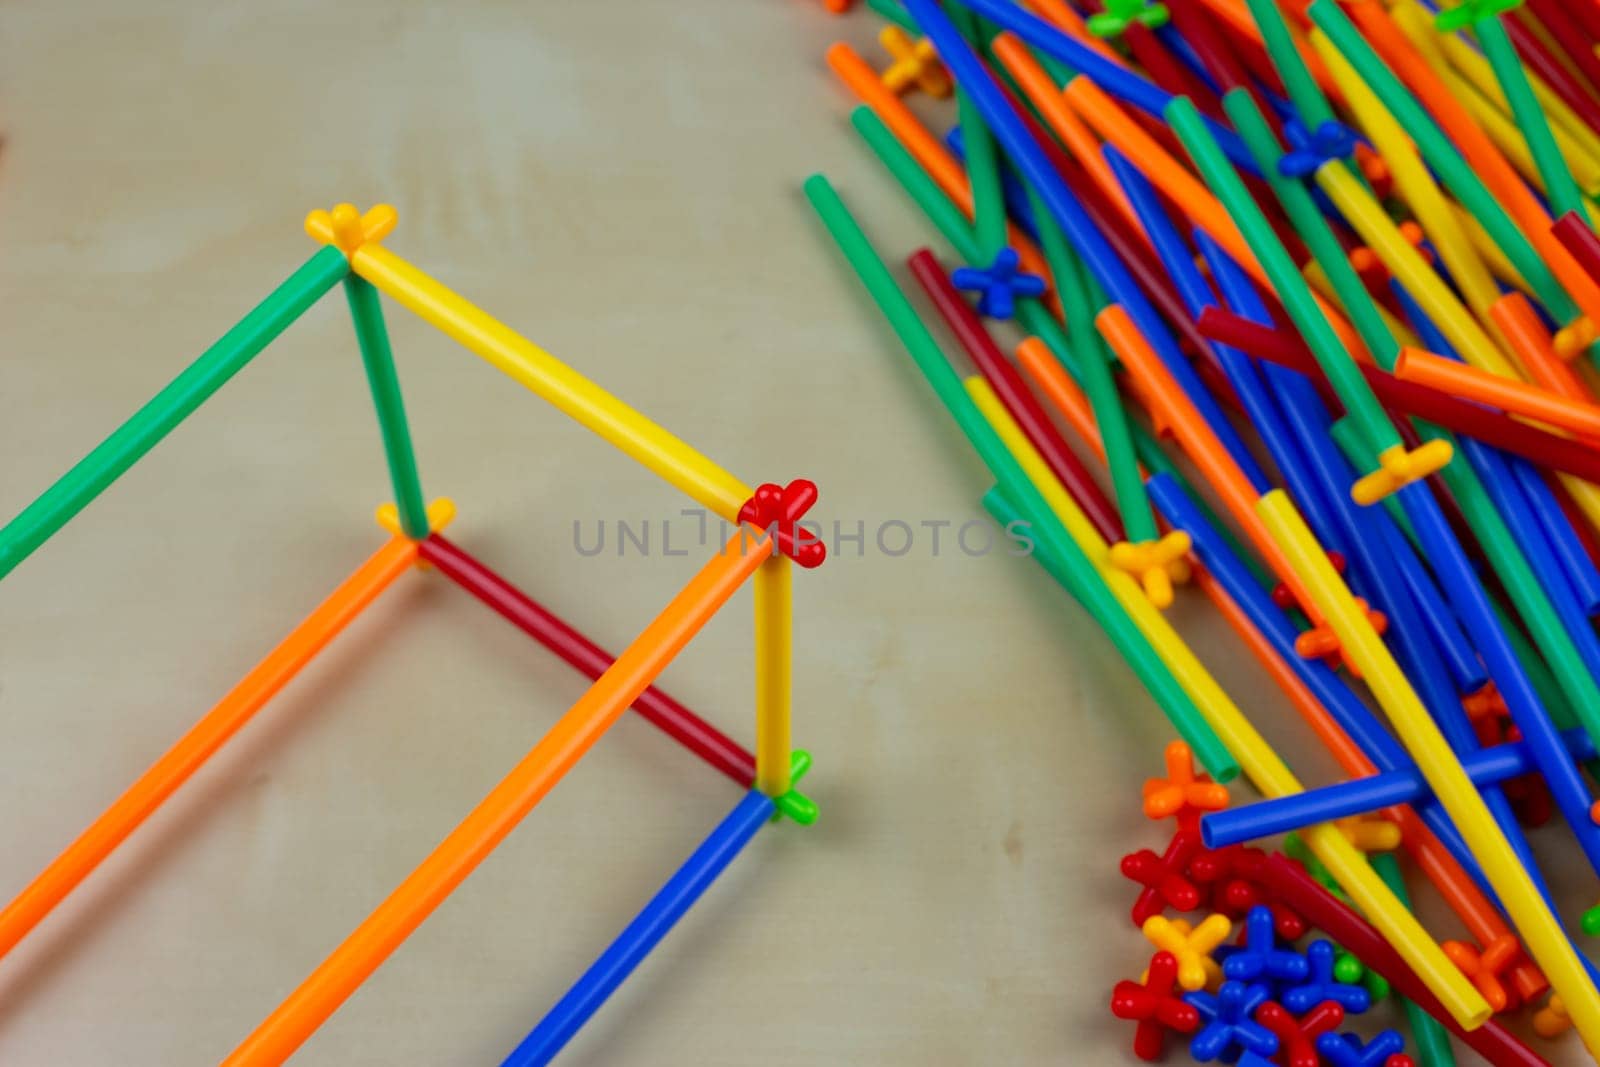 Frame made of plastic multi colored flexible tubes for children